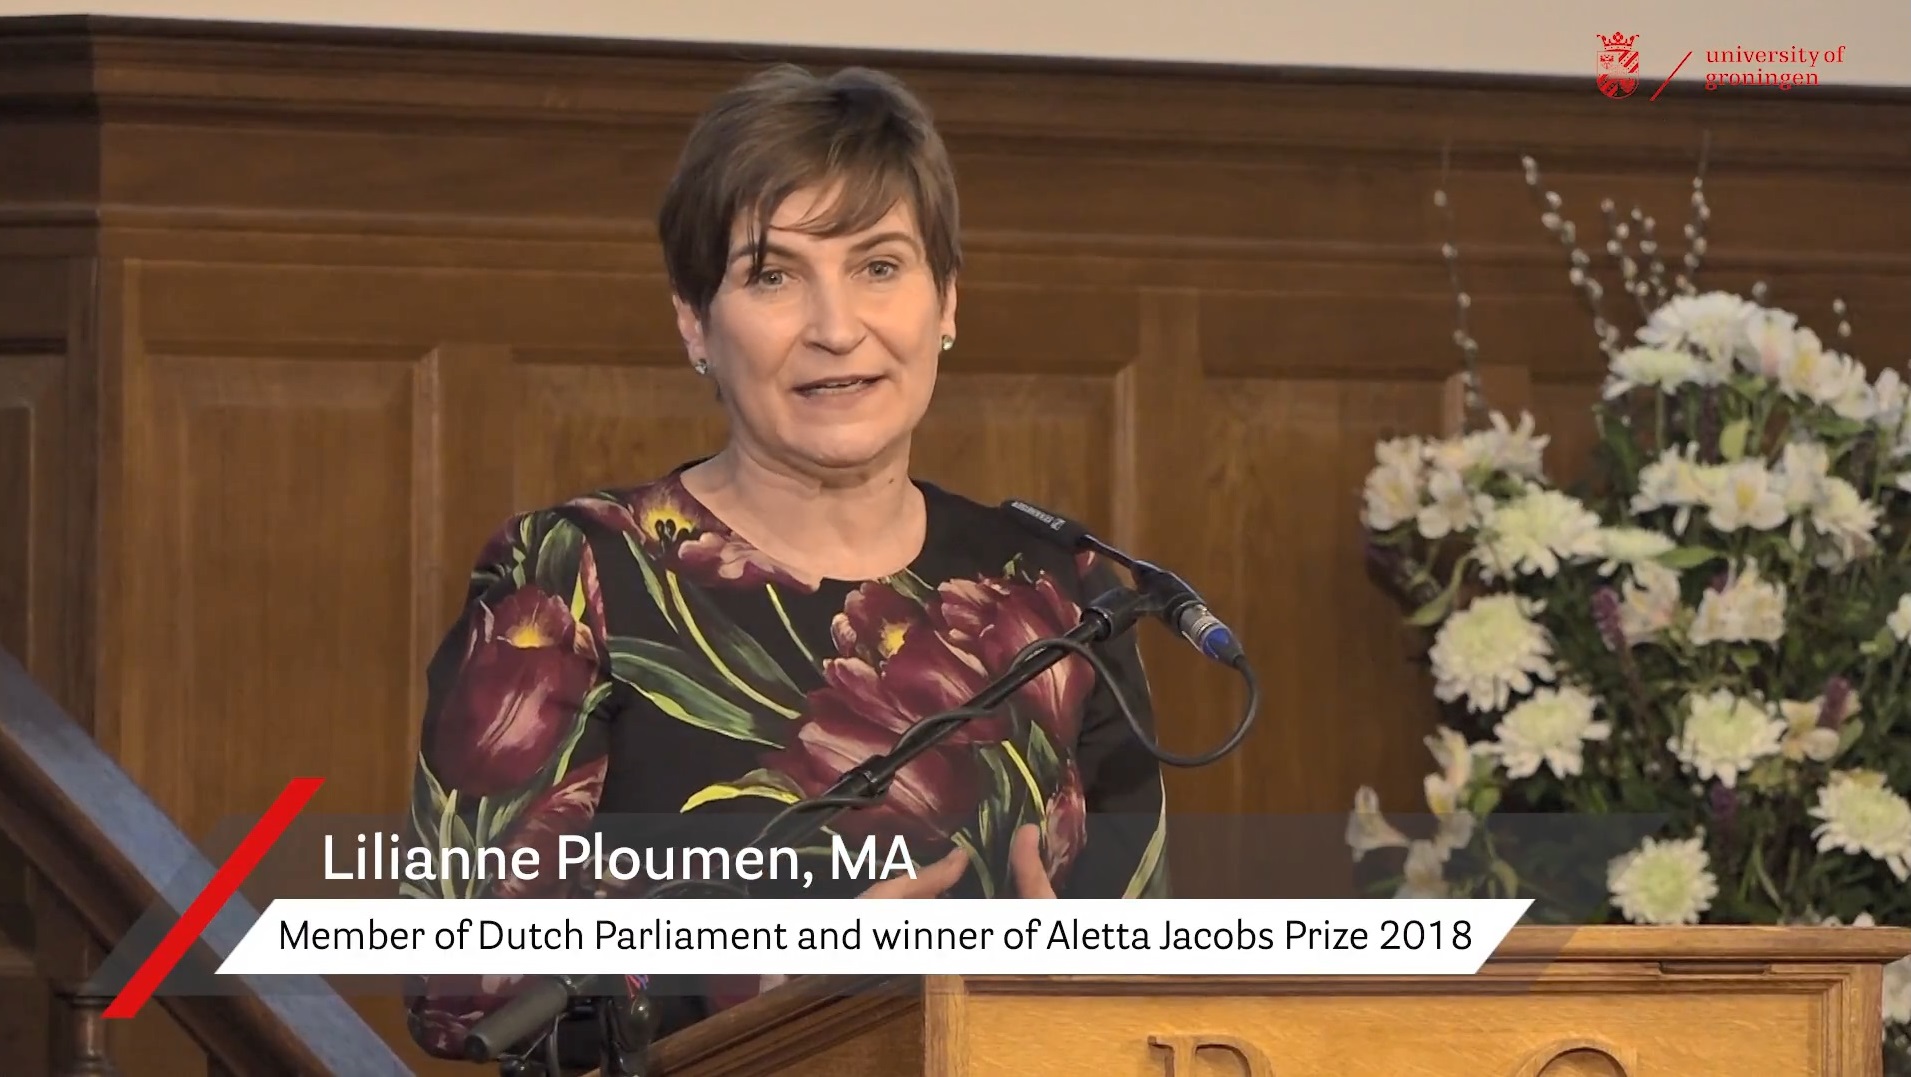 Presentation of the Aletta Jacobs Prize 2018 to Lilianne Ploumen